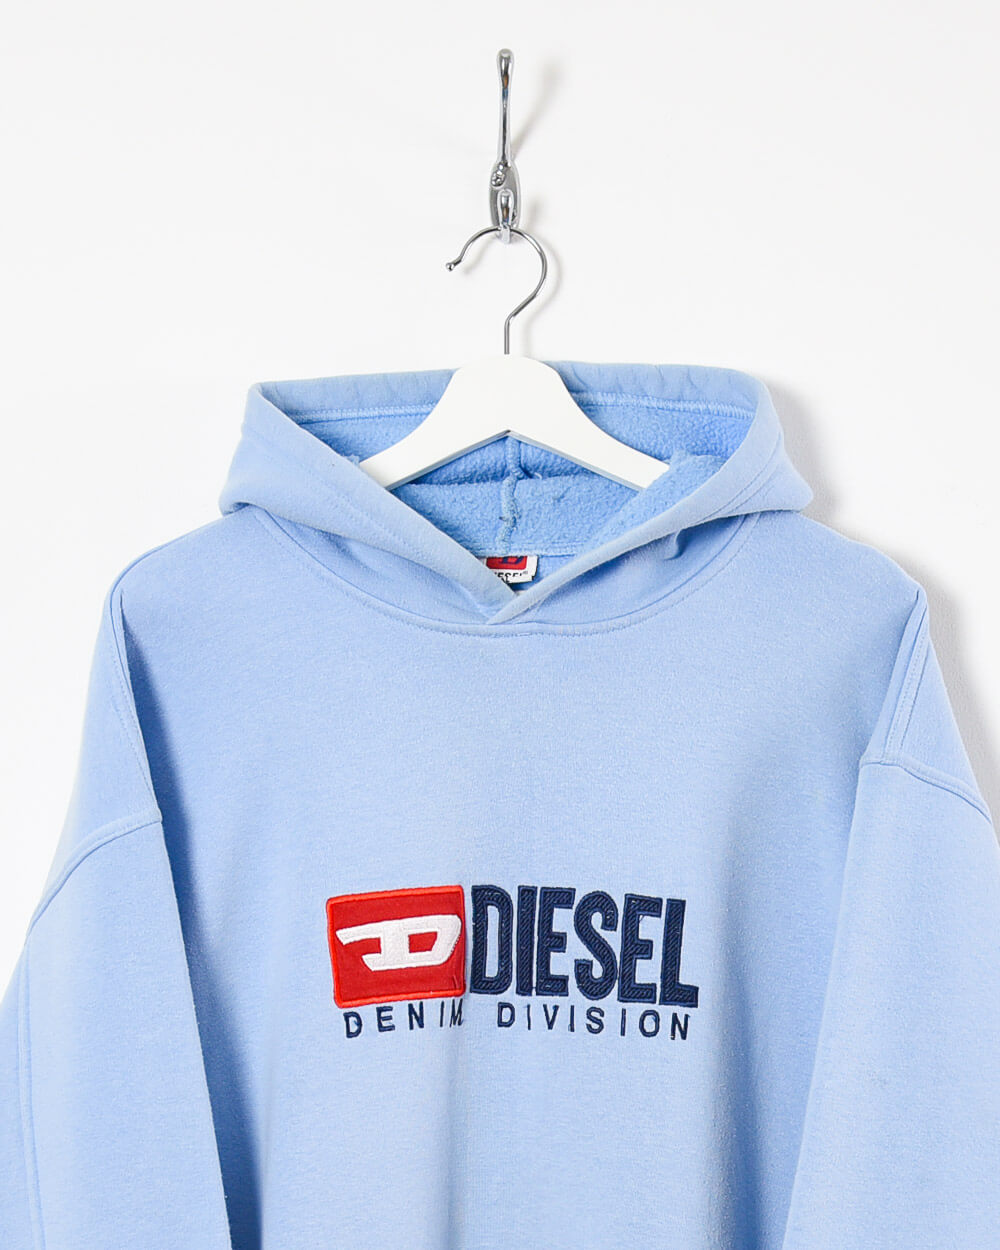 Diesel Denim Division Hoodie - XX-Large - Domno Vintage 90s, 80s, 00s Retro and Vintage Clothing 